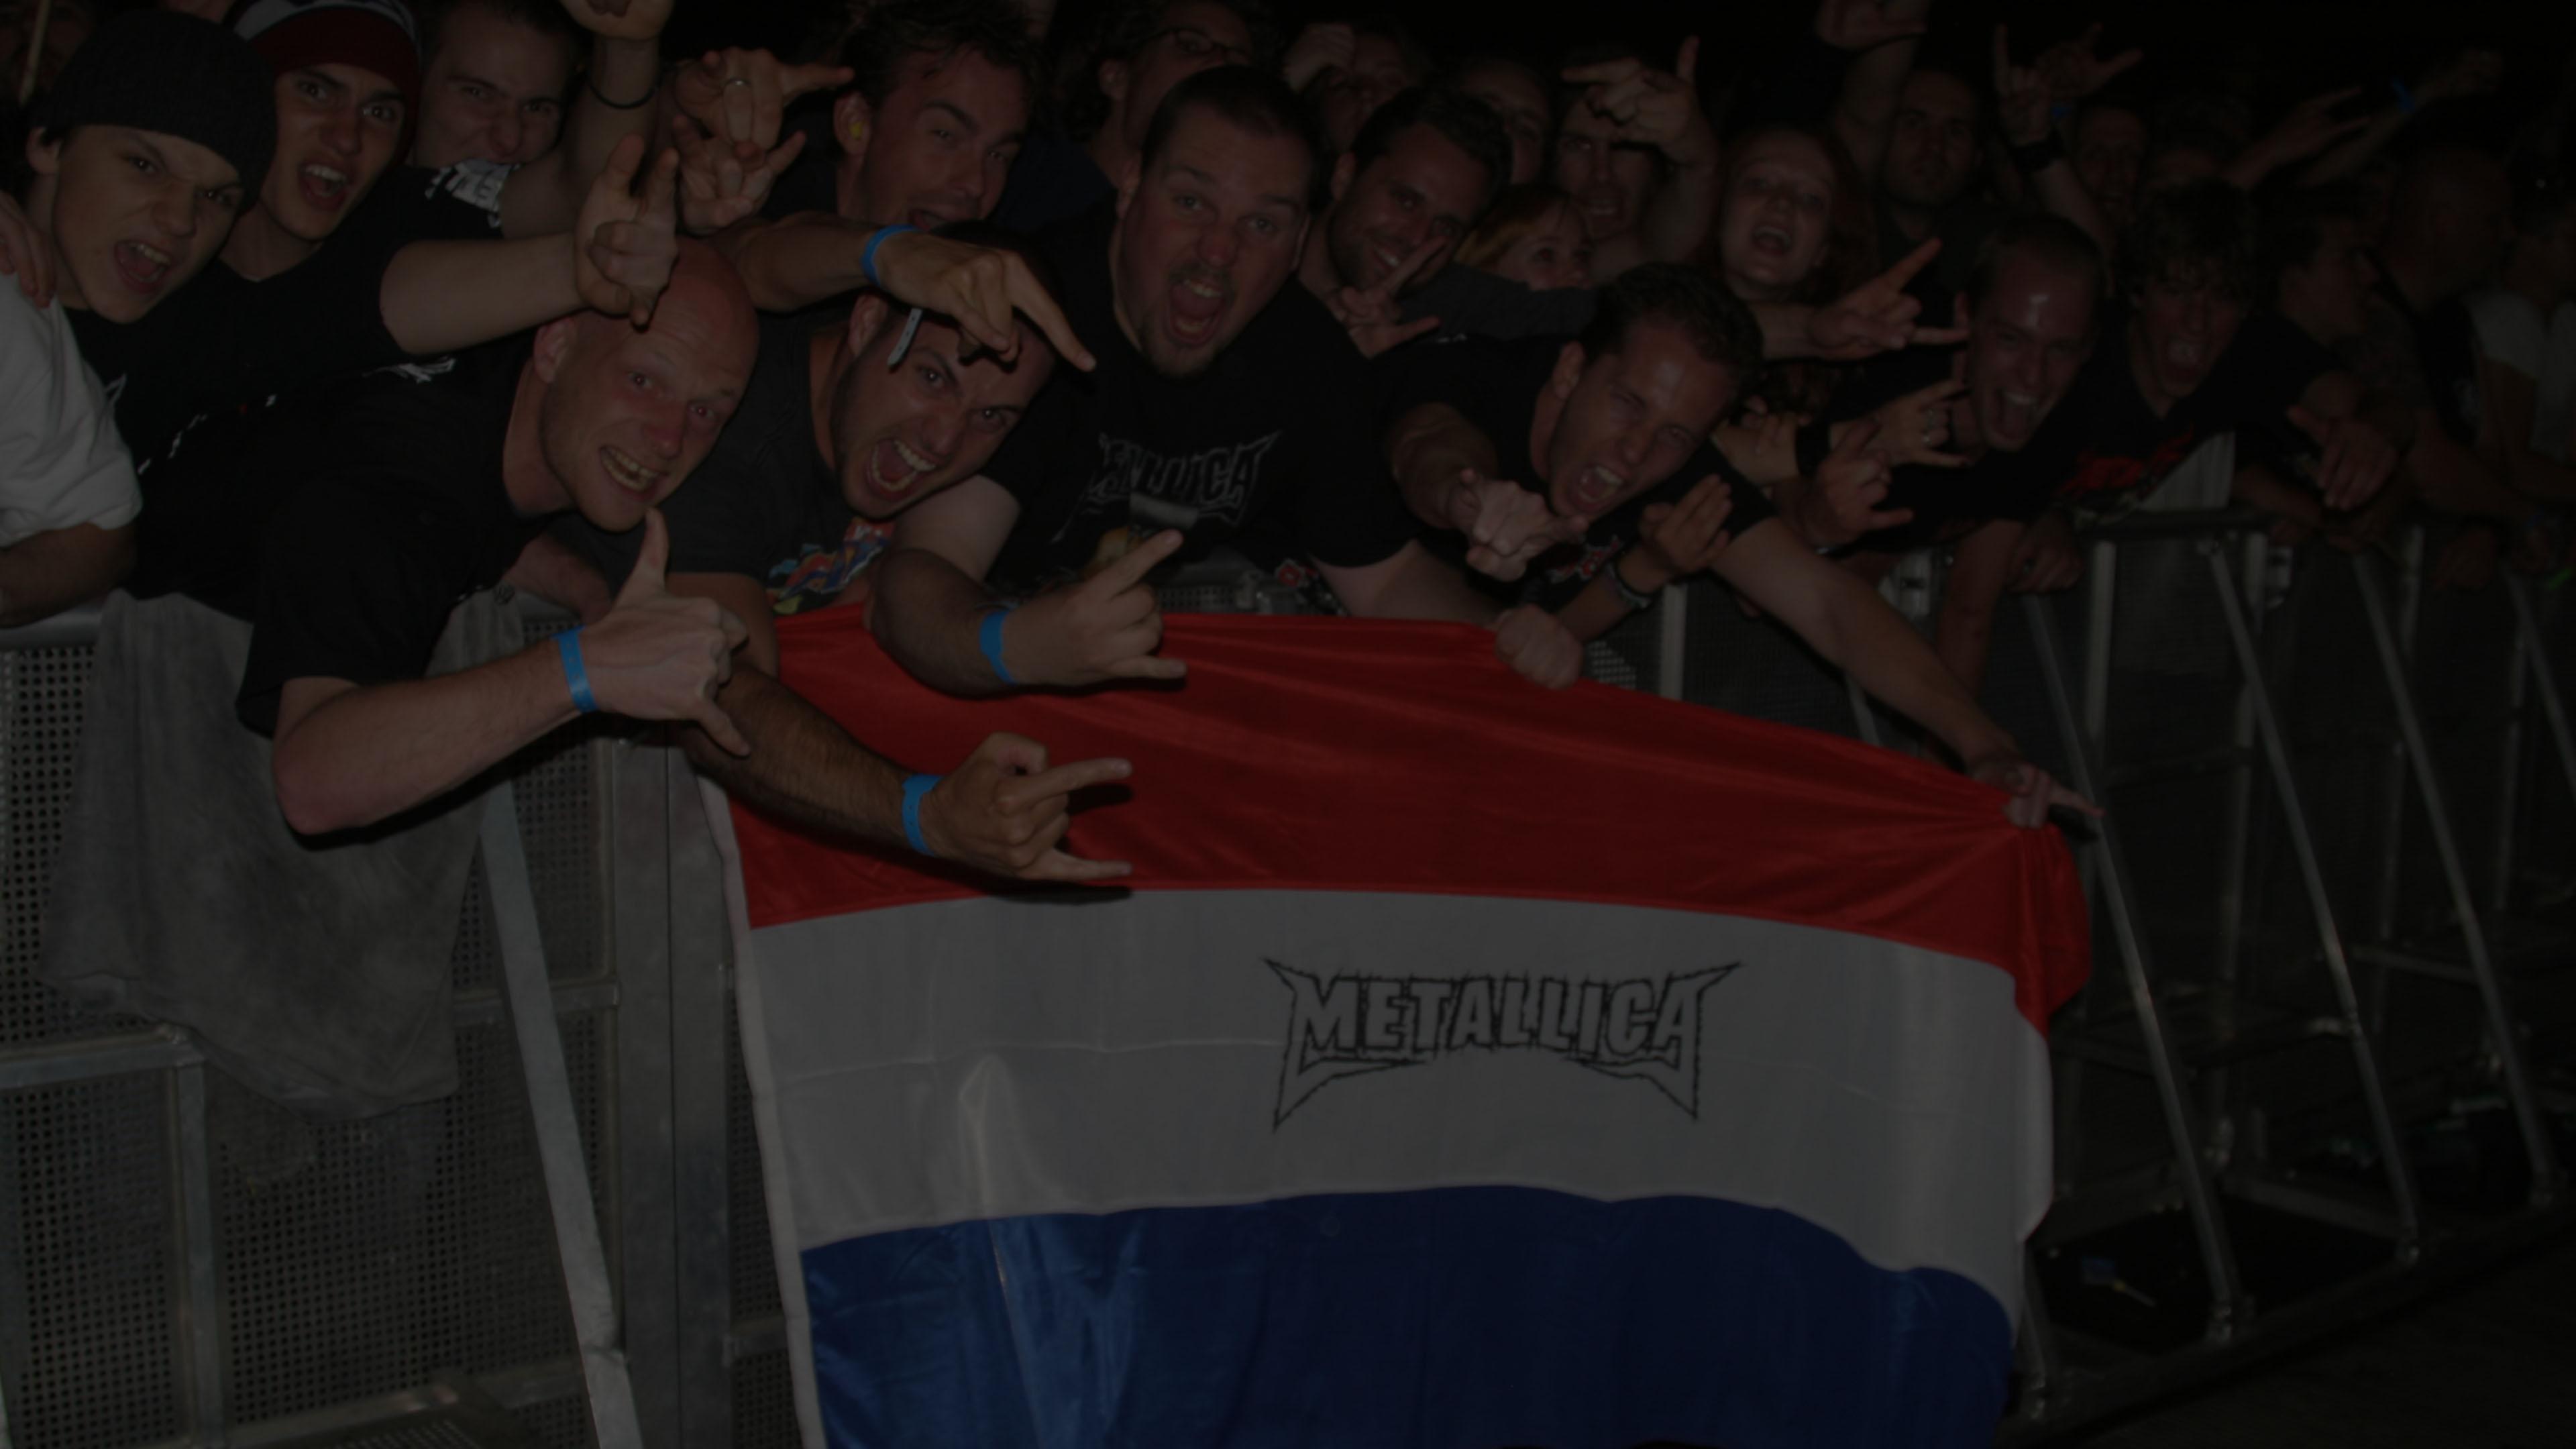 Metallica at ArenA in Amsterdam, Netherlands on June 21, 2004